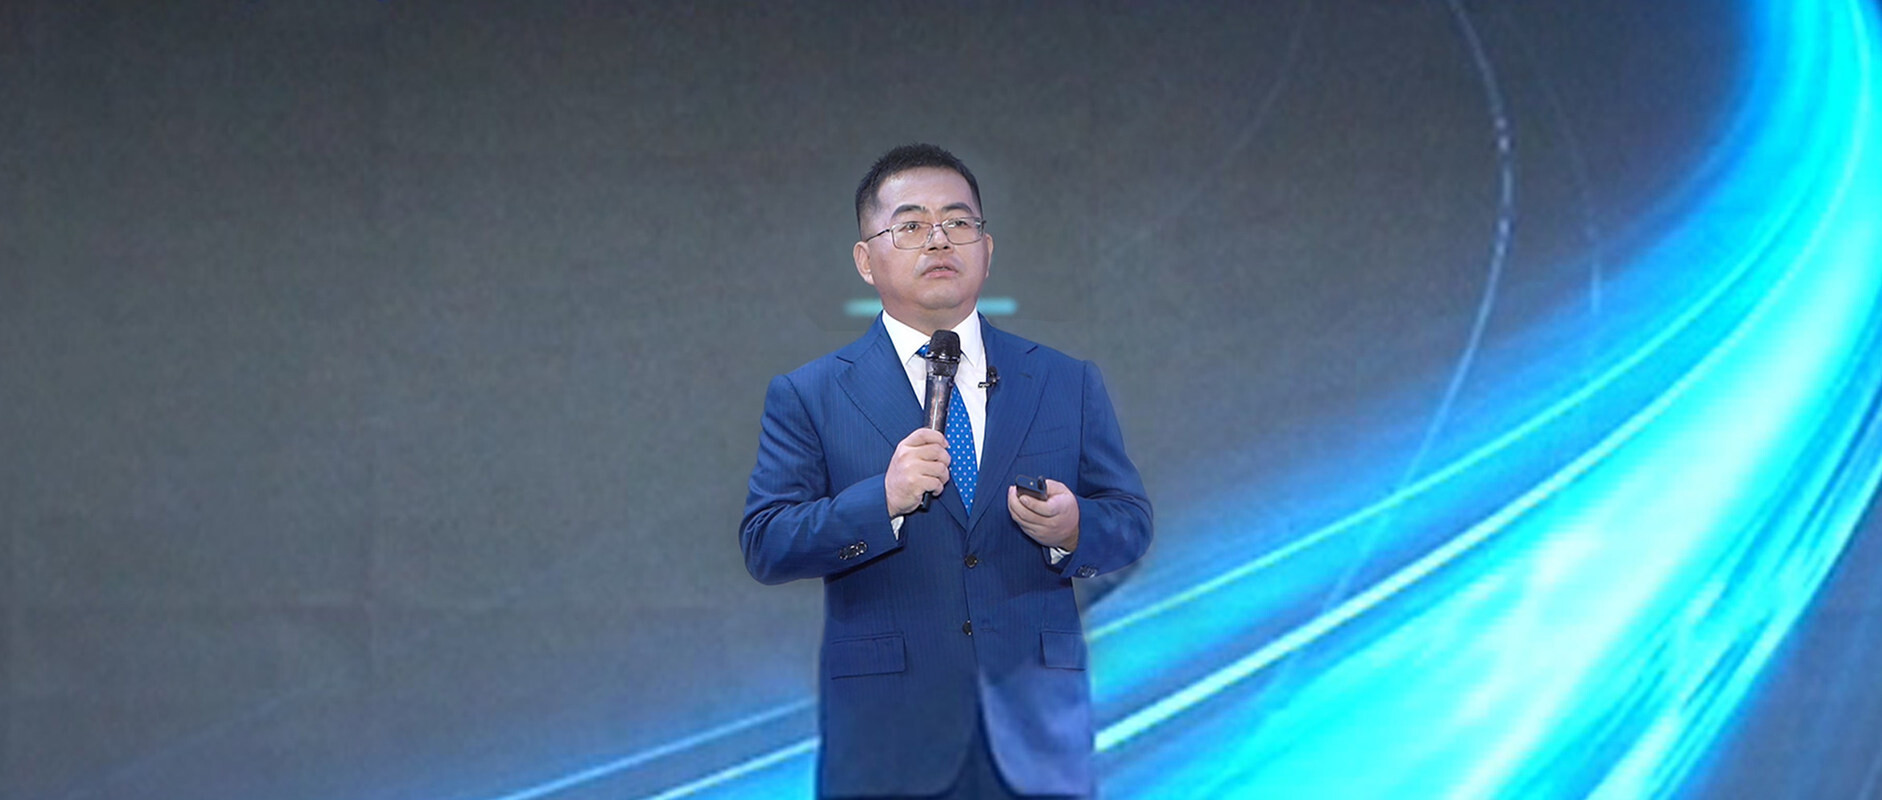 Xie Junshi ประธานเจ้าหน้าที่ฝ่ายปฏิบัติการของ ZTE ขึ้นกล่าวคำปราศรัยสำคัญ สะท้อนความยืดหยุ่นของ ZTE ในการเติบโตอย่างรวดเร็ว